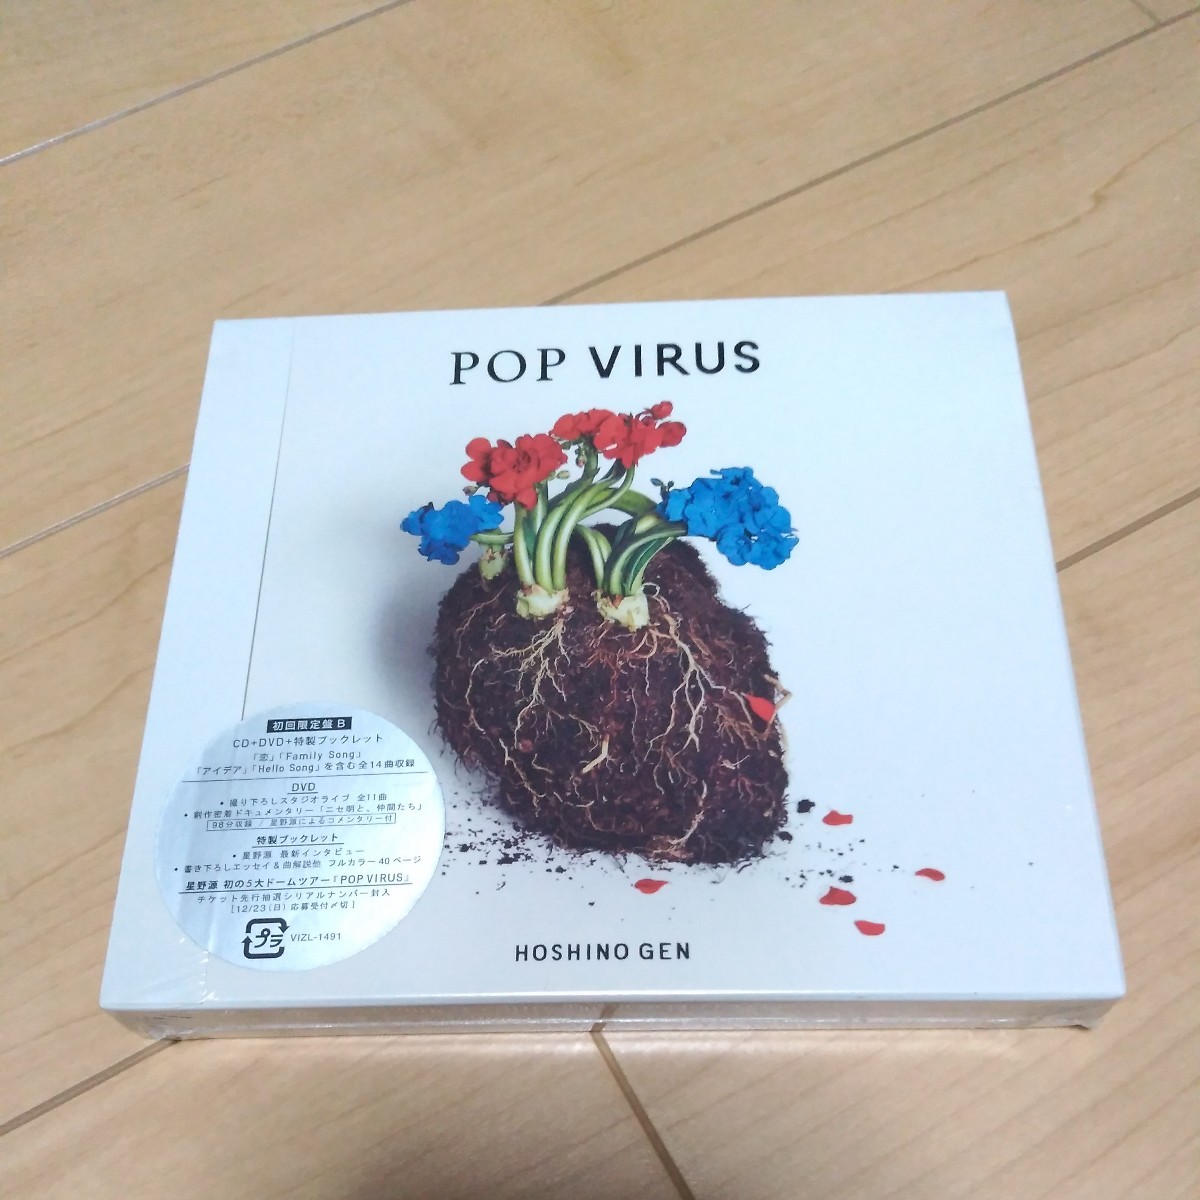 星野源 POP VIRUS 初回限定盤 B CD+DVD+特製ブックレット 新品 未開封_画像1